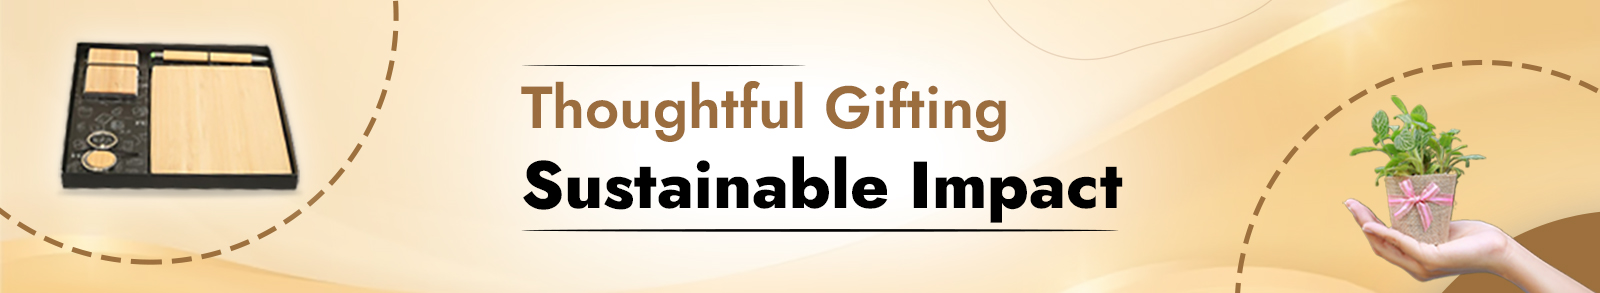 Thoughtful Gifting, Sustainable Impact_1600